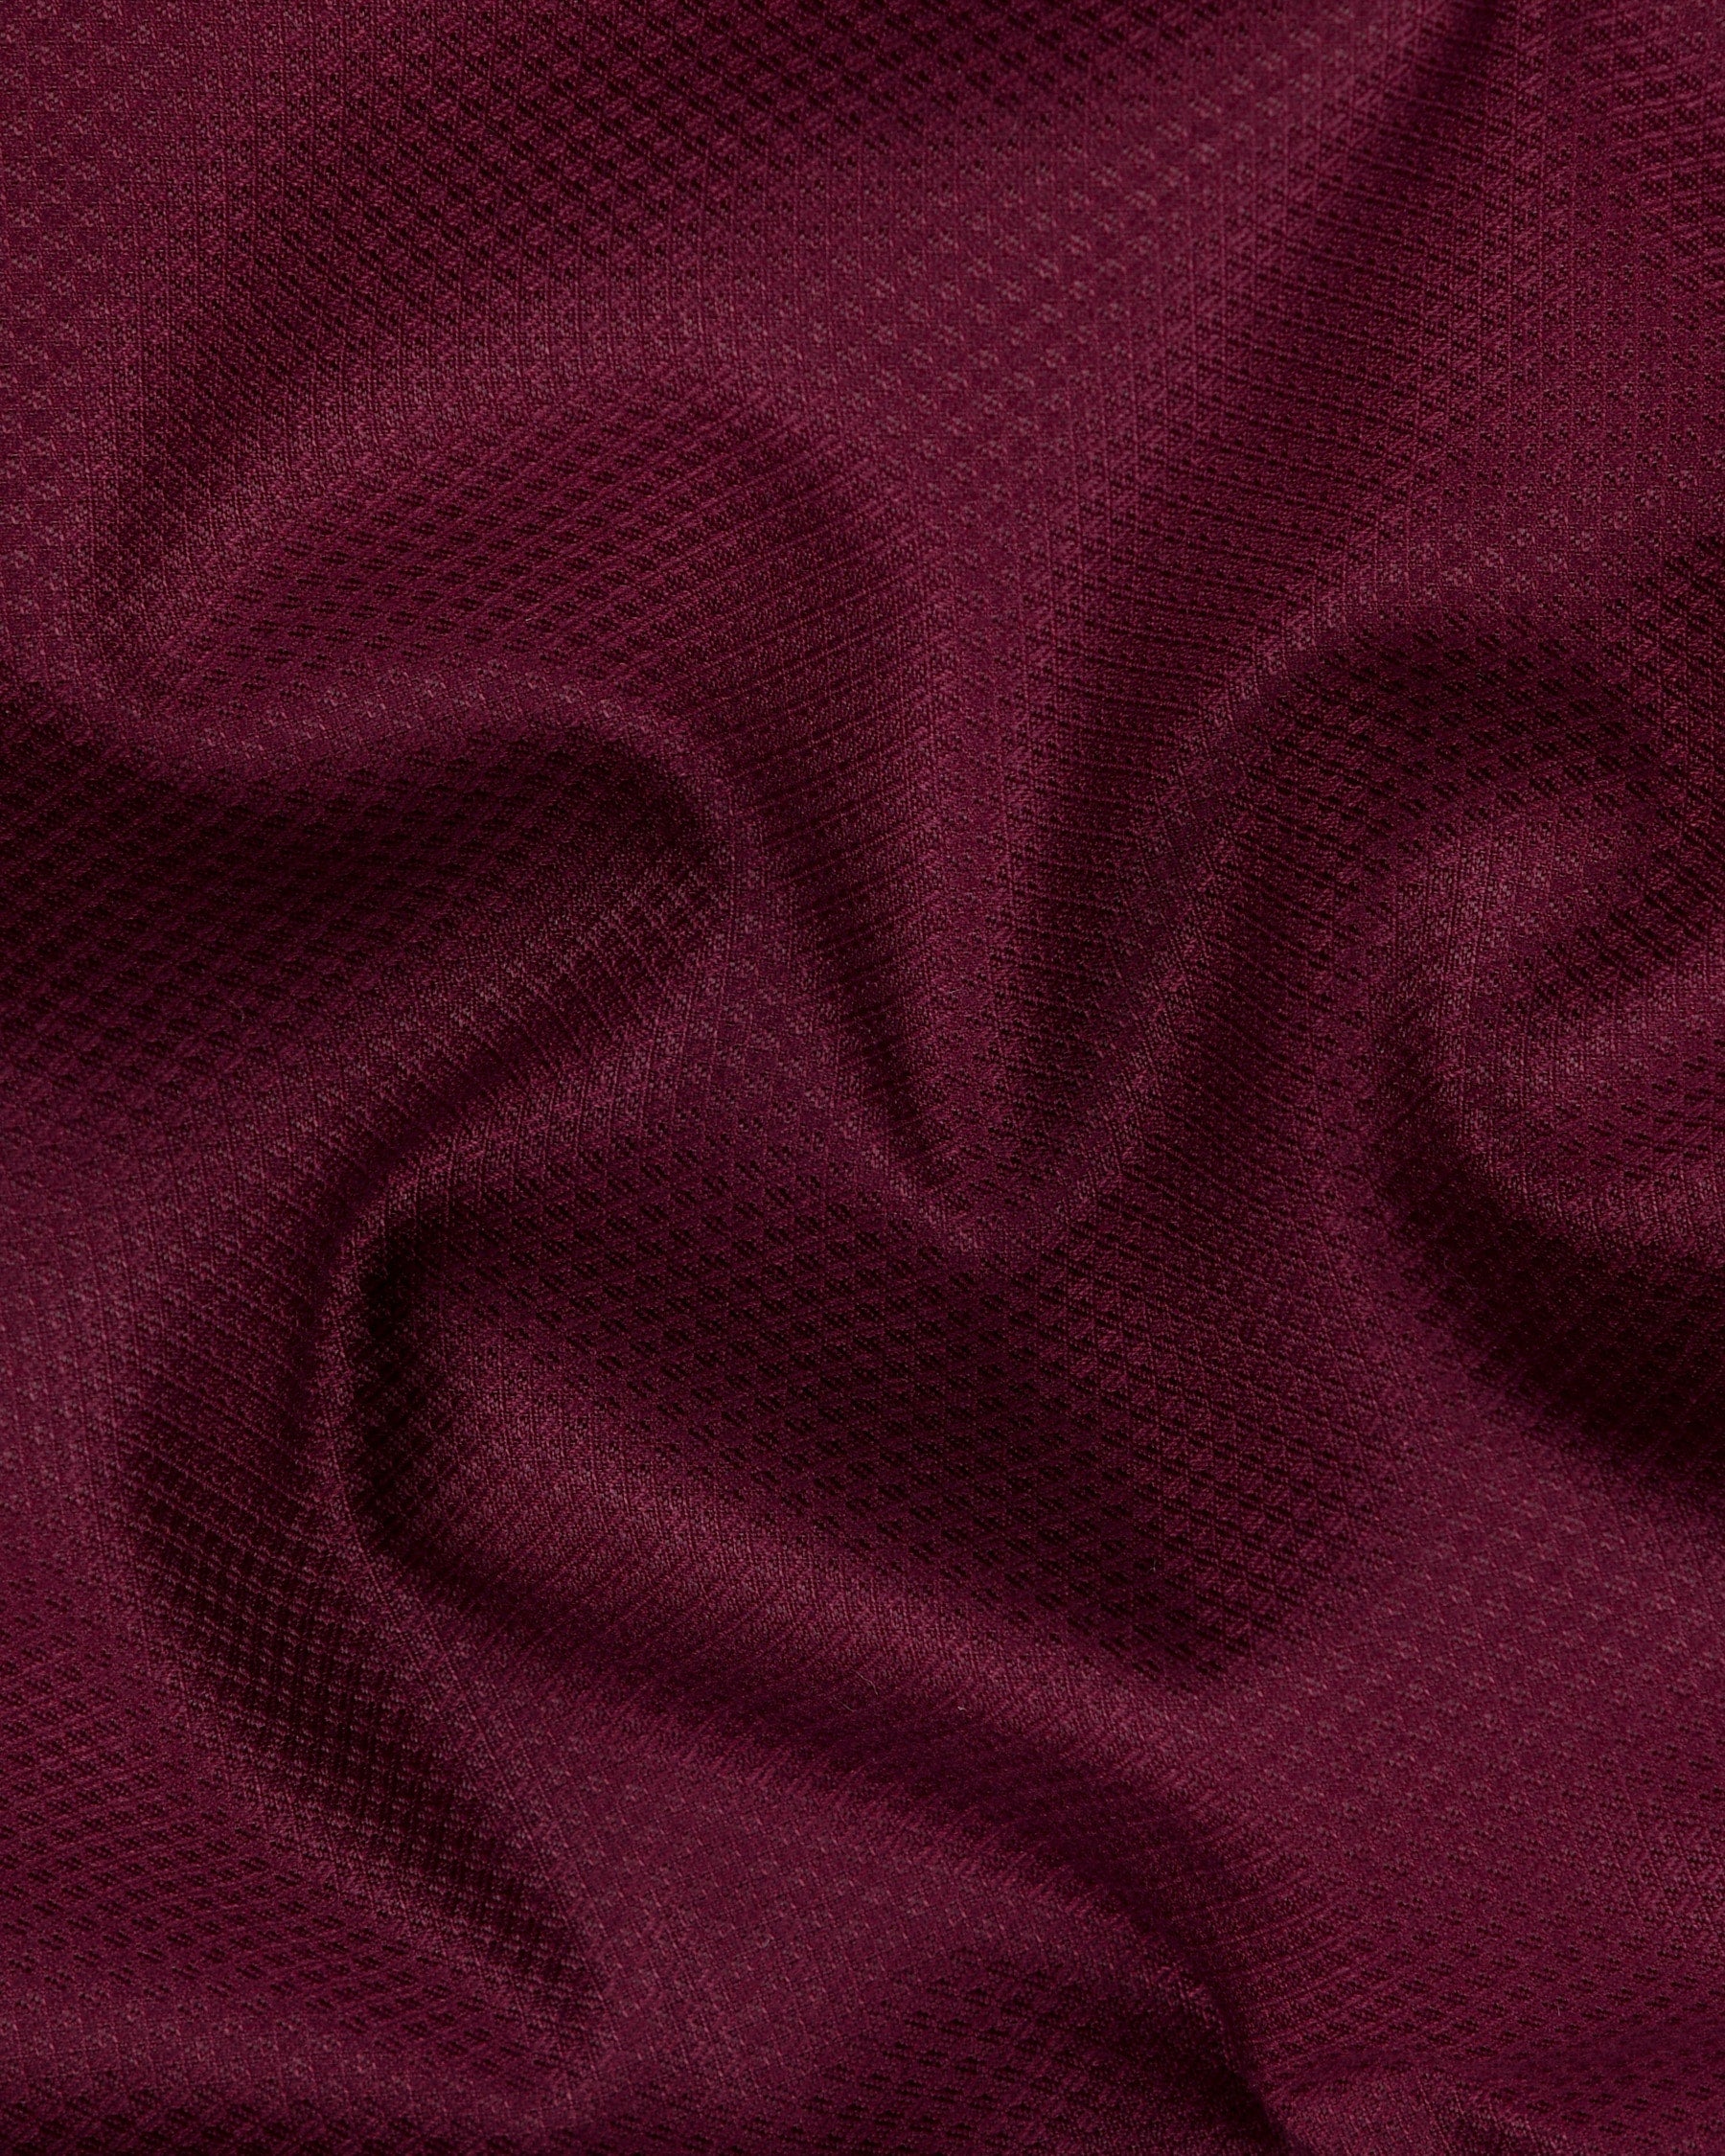 Garnet red Diamond Textured Premium Wool Blend Pant